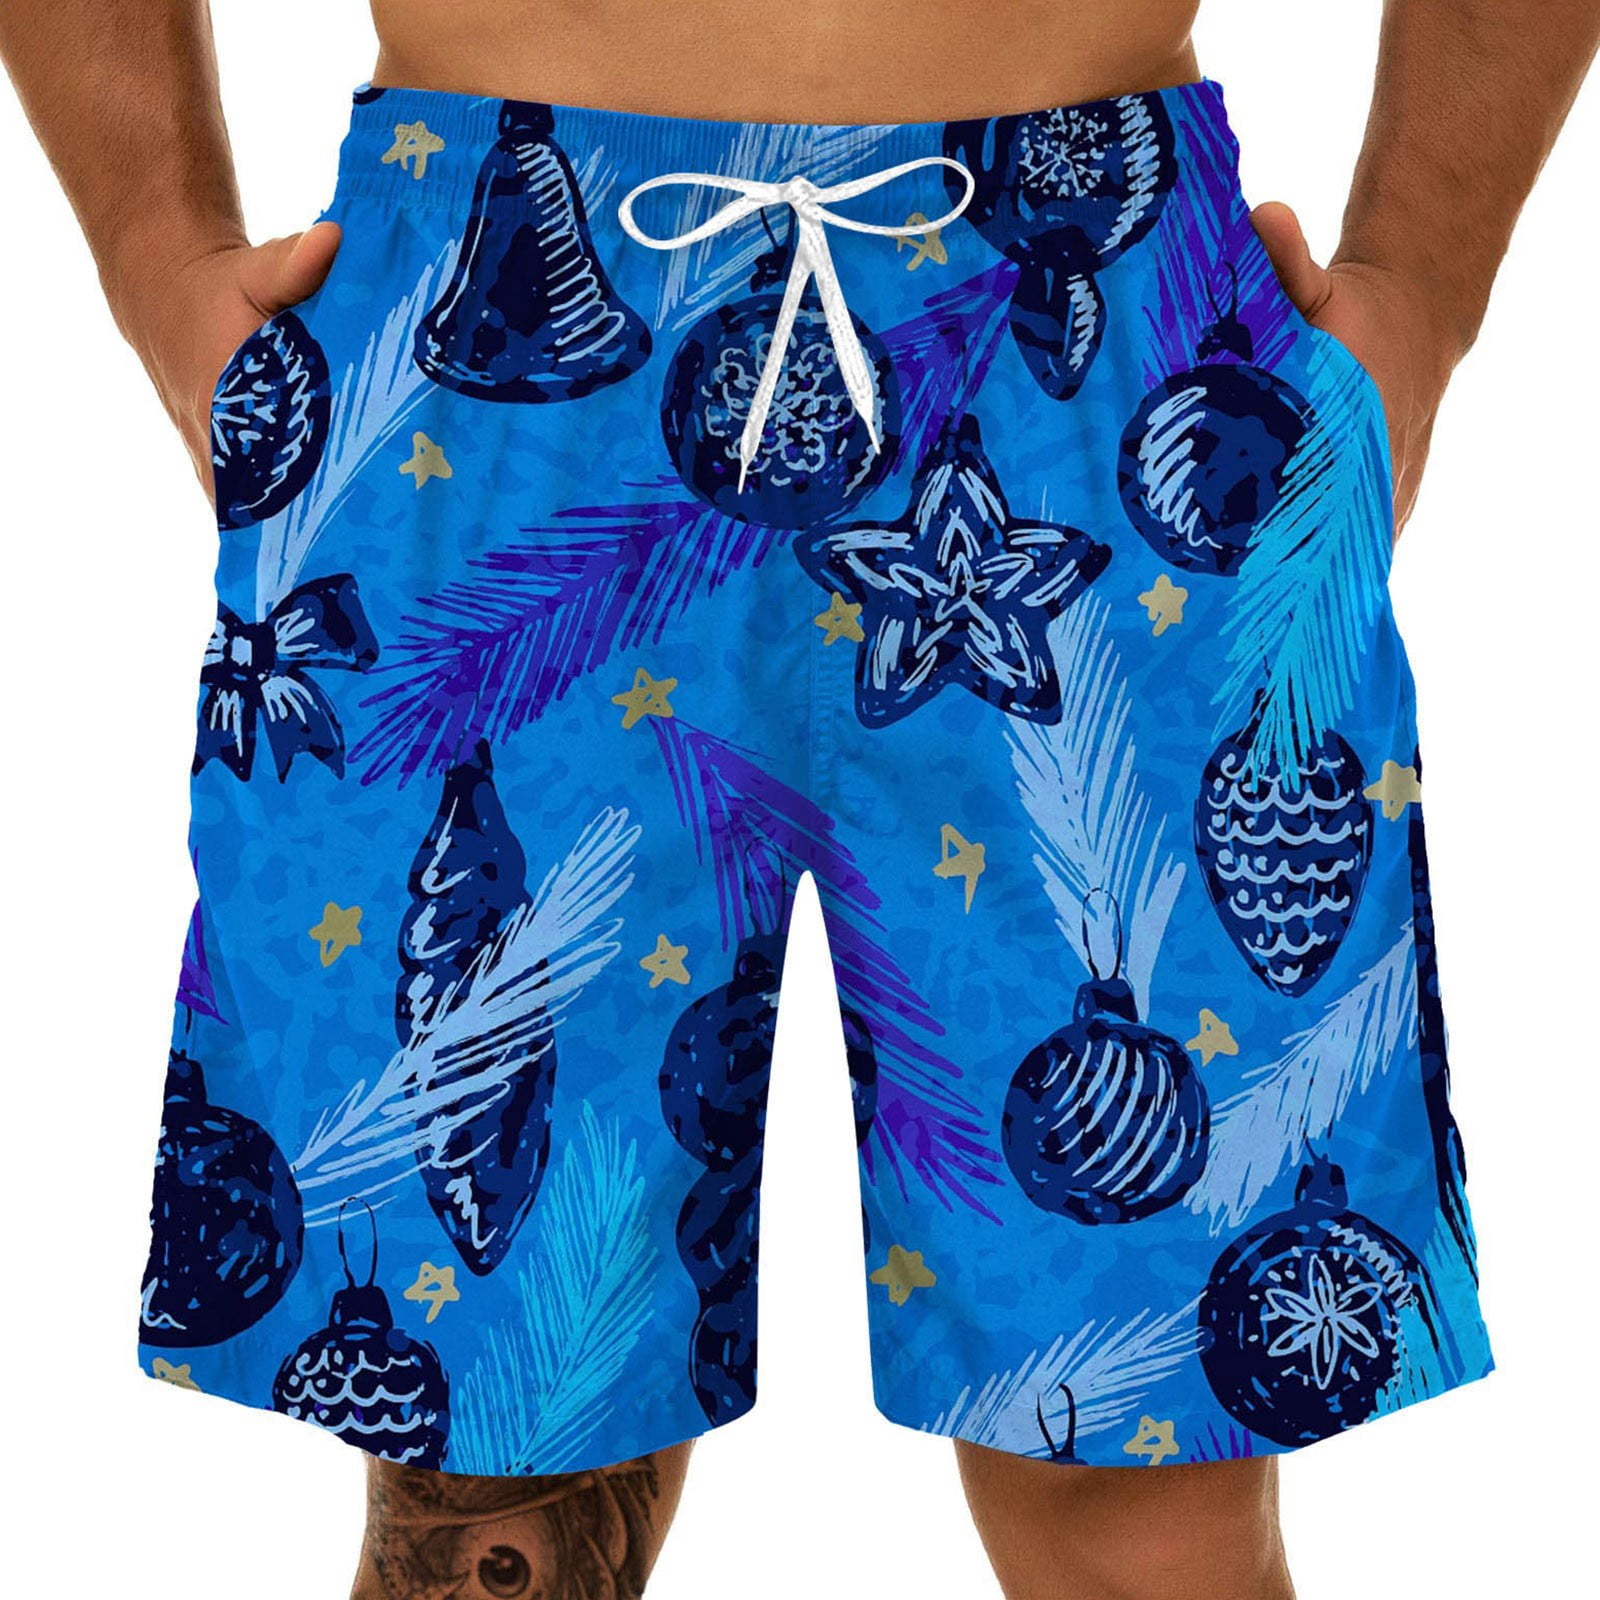 Rigg-pants Women Comfortable Hawaii Beach Travel Funny Beach Shorts Swim Trunks Board Shorts